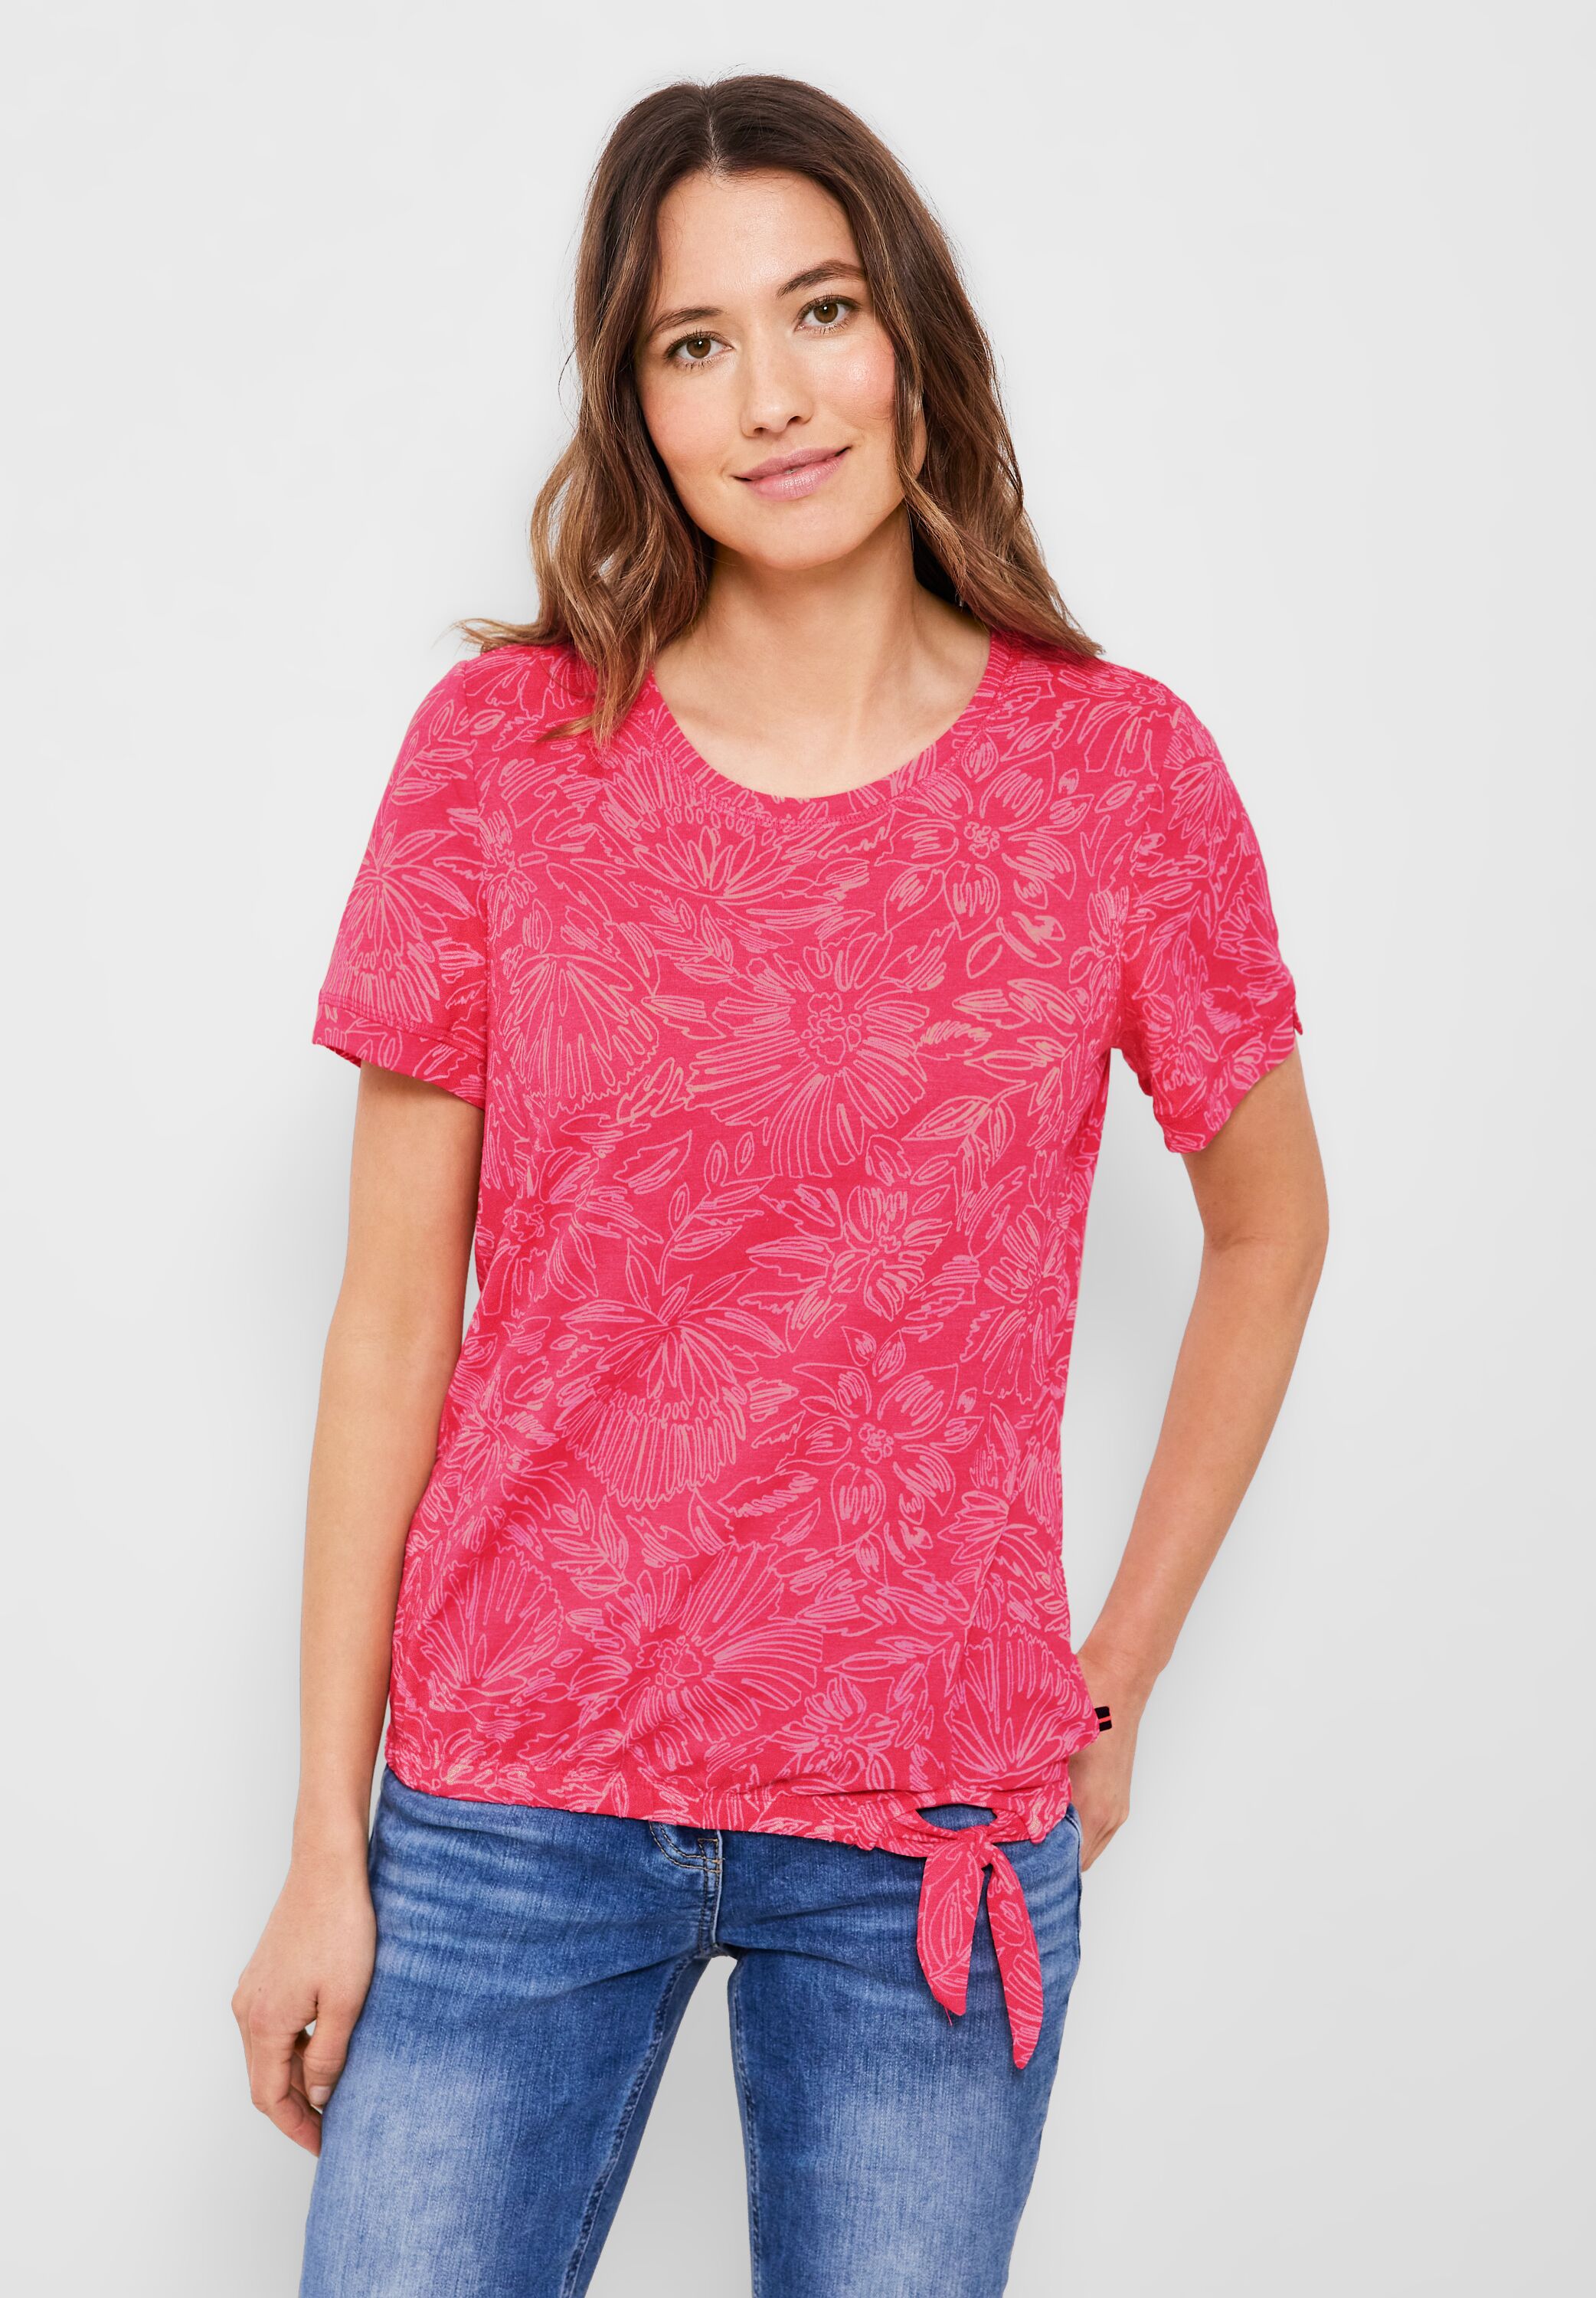 CECIL T-Shirt in Strawberry Mode - CONCEPT reduziert im B319600-24472 Red SALE